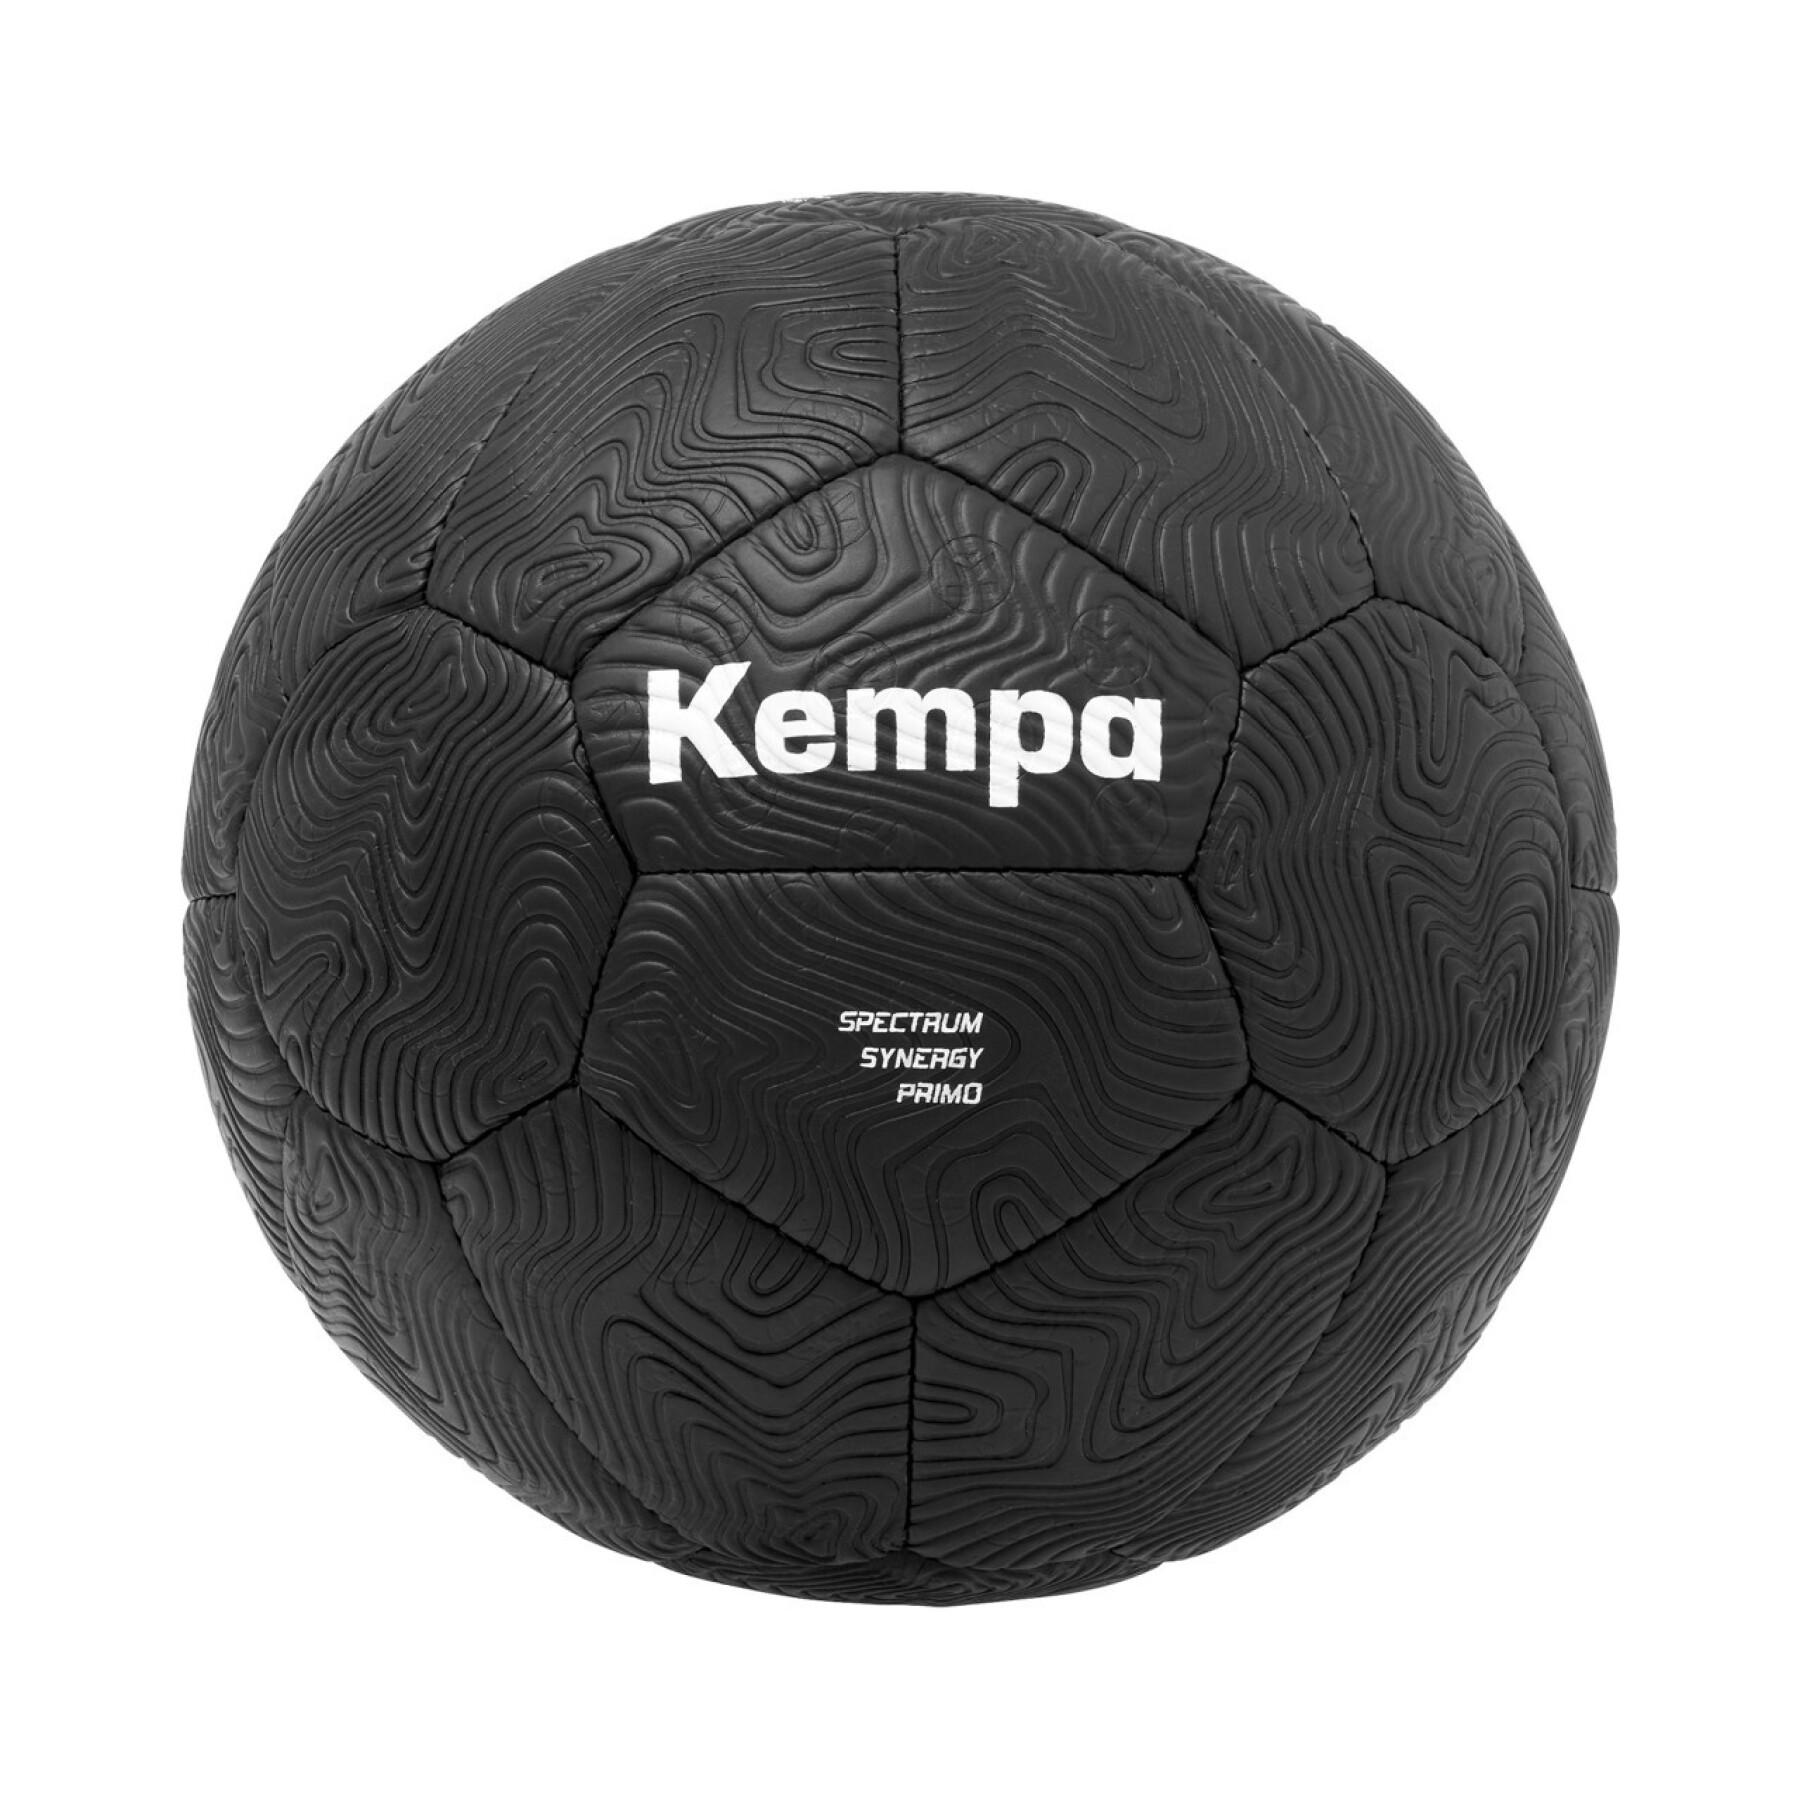 Handball Kempa 